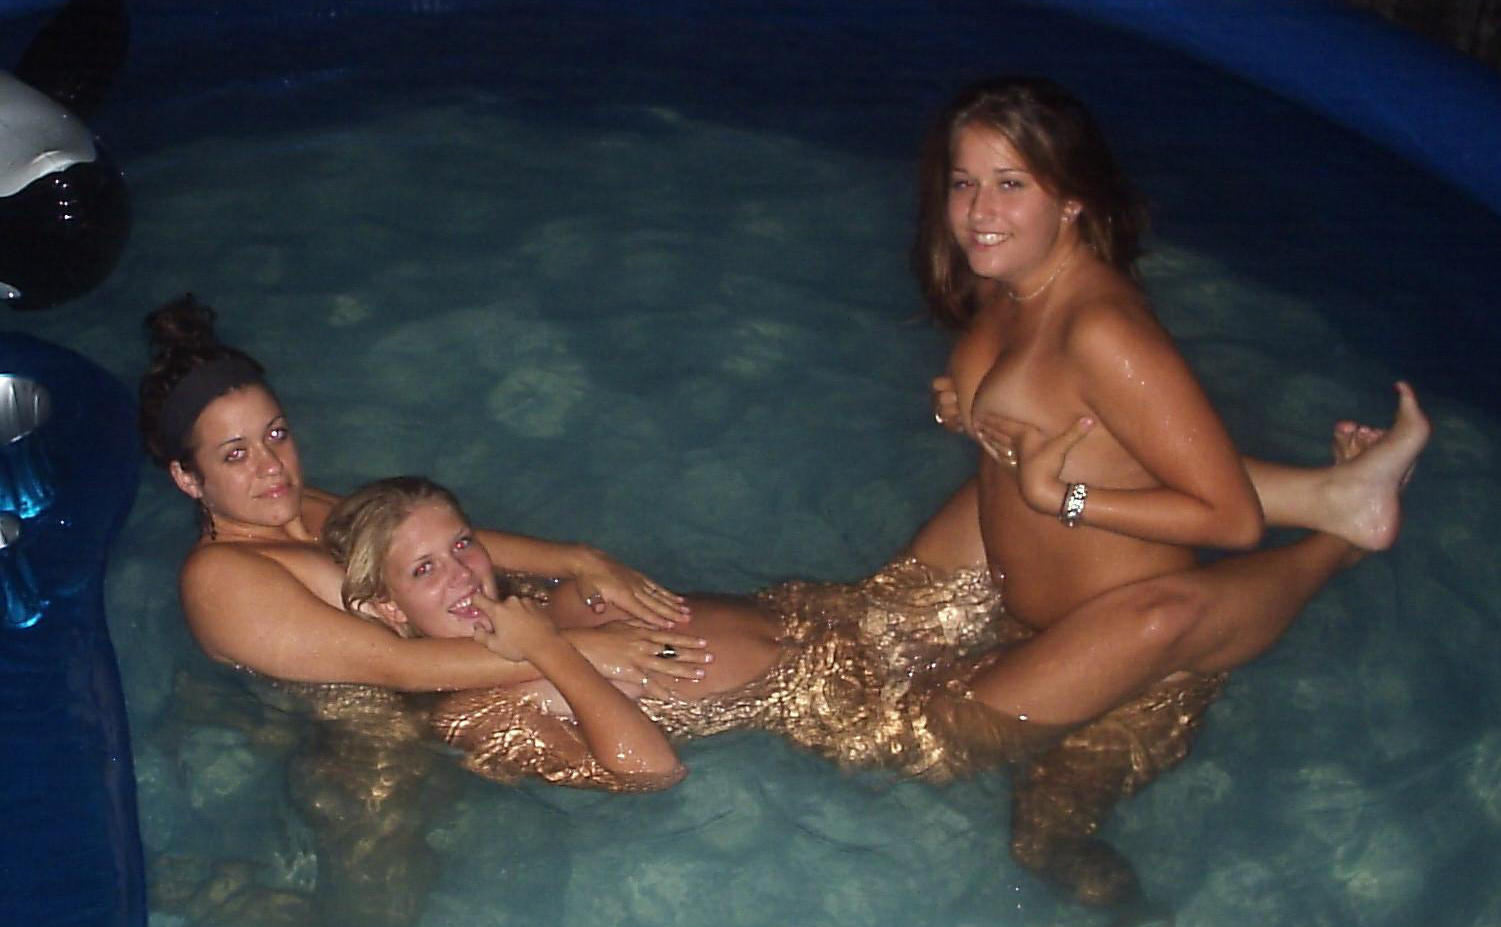 Teens Skinny Dipping Pool Party